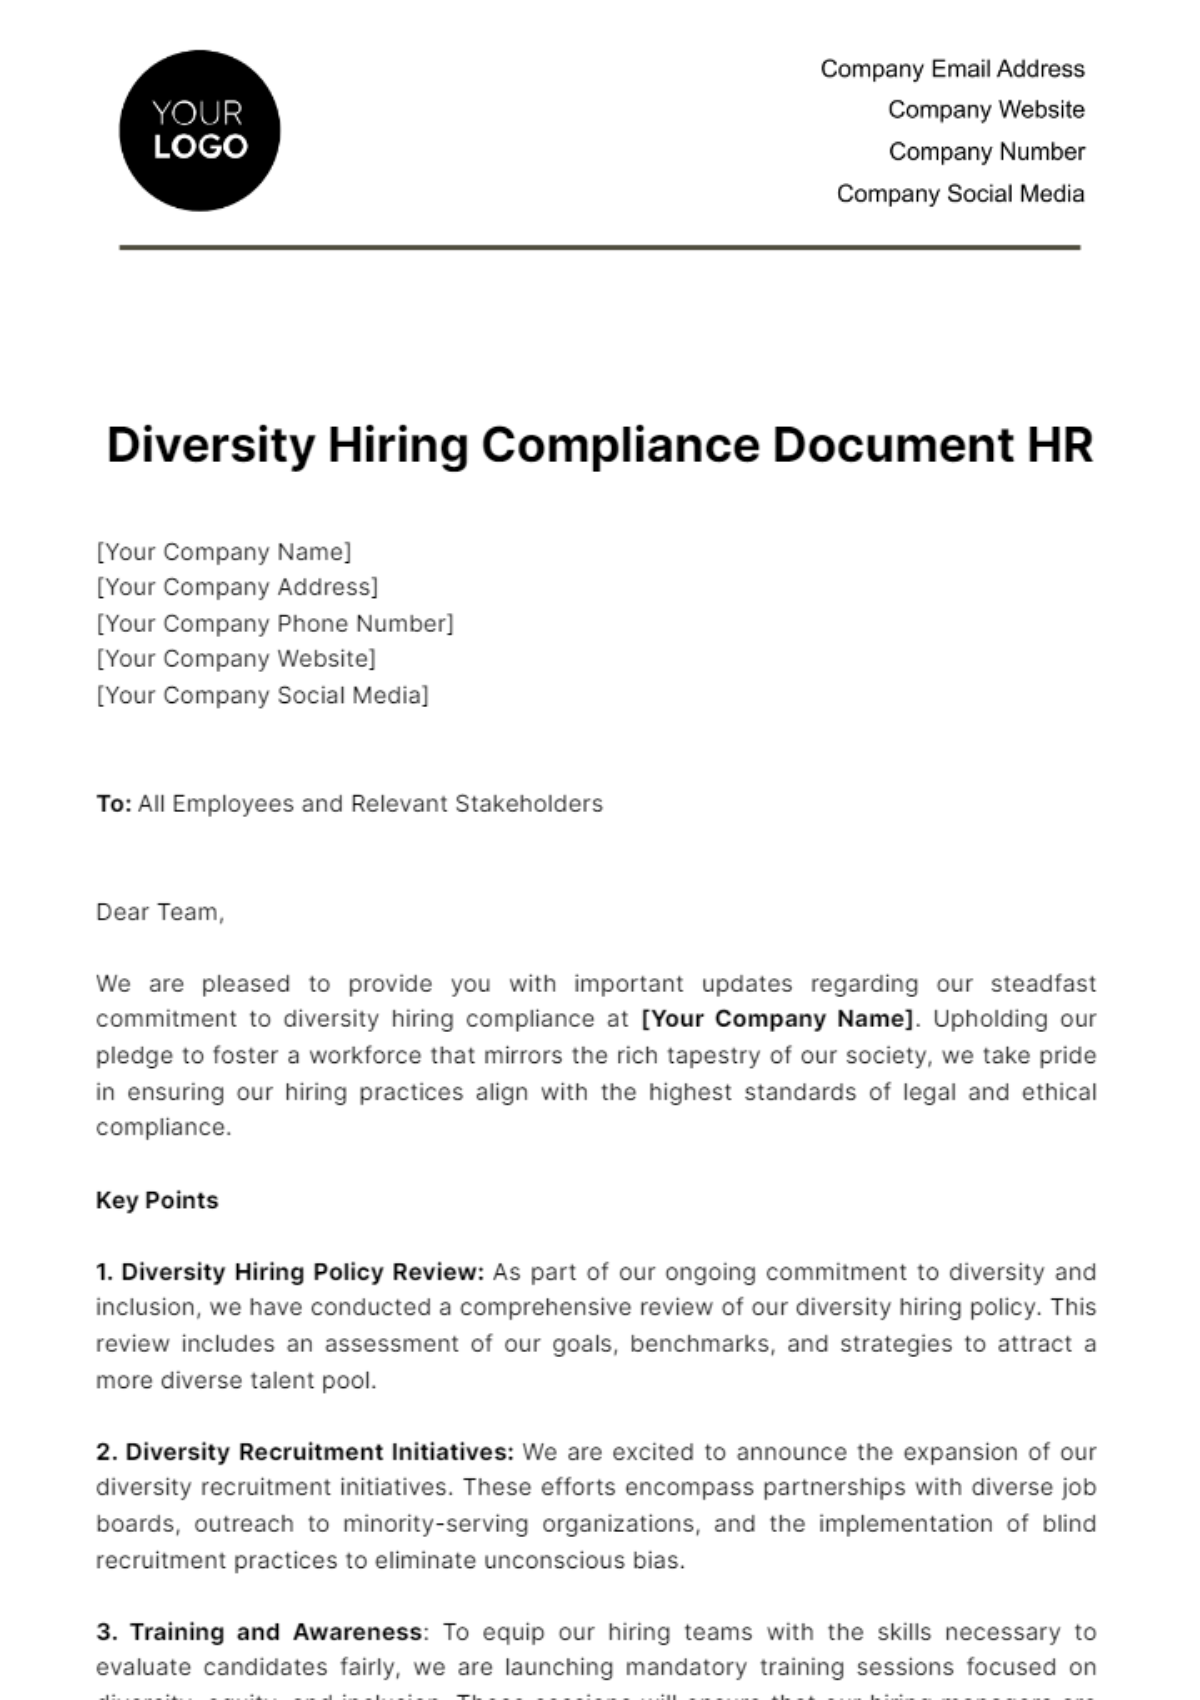 Diversity Hiring Compliance Document HR Template